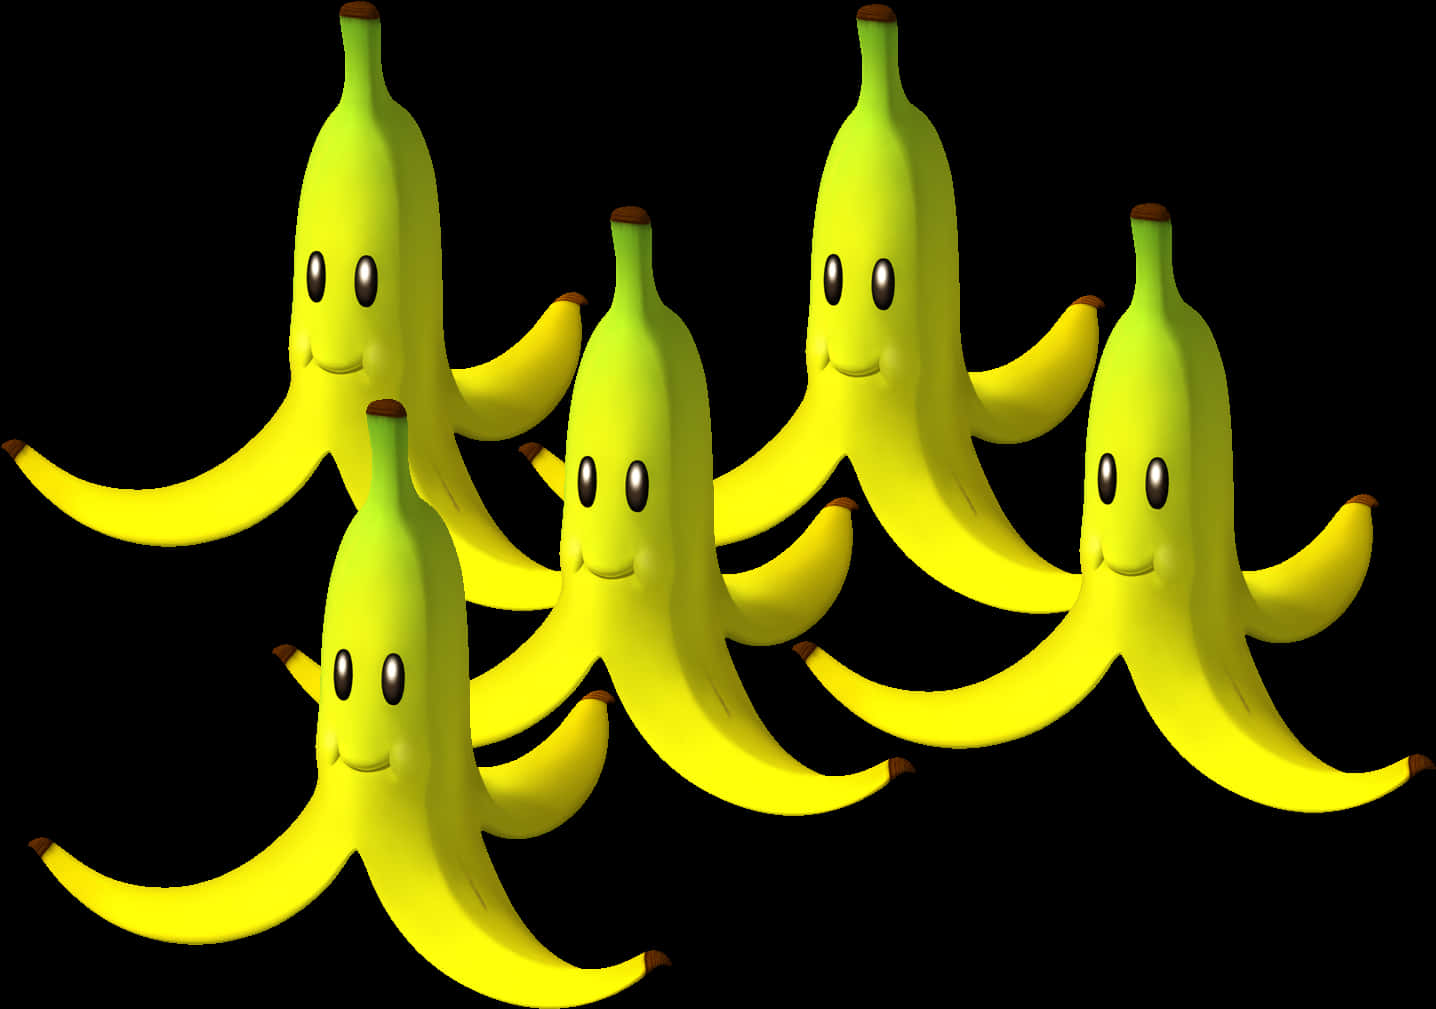 Mario Kart Banana Bunch